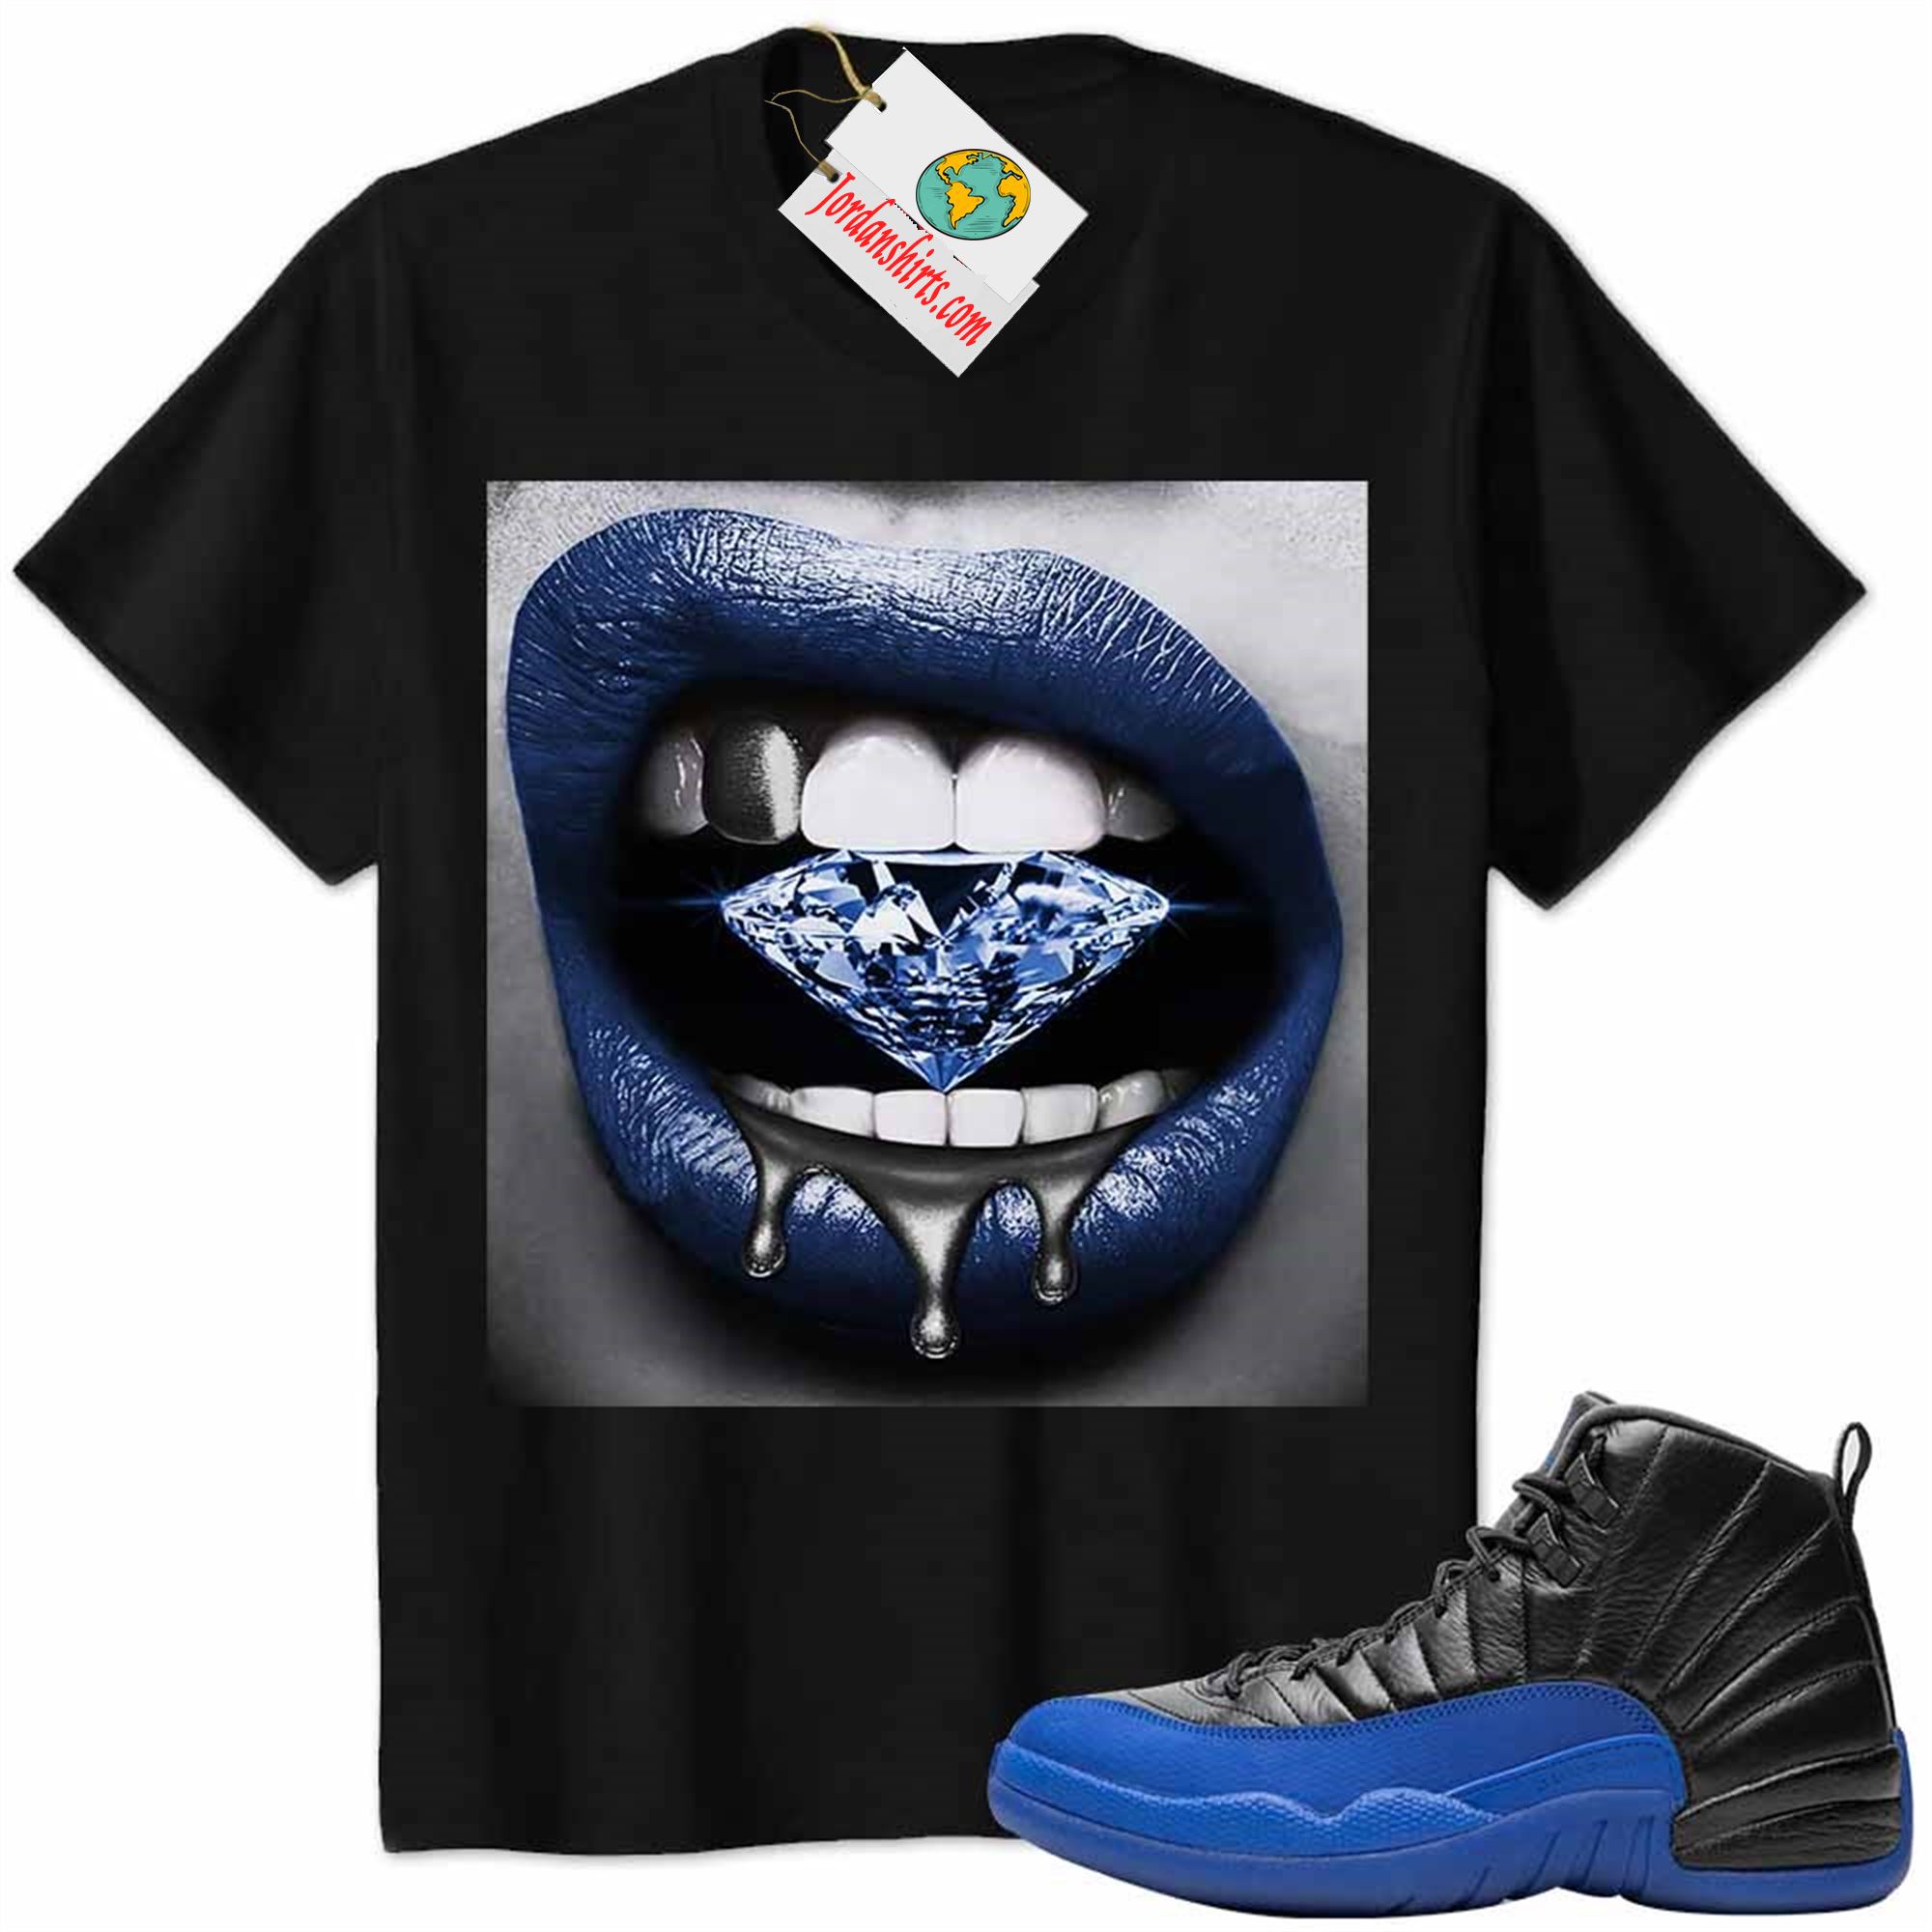 Jordan 12 Shirt, Jordan 12 Game Royal Shirt Sexy Lip Bite Diamond Dripping Black Full Size Up To 5xl